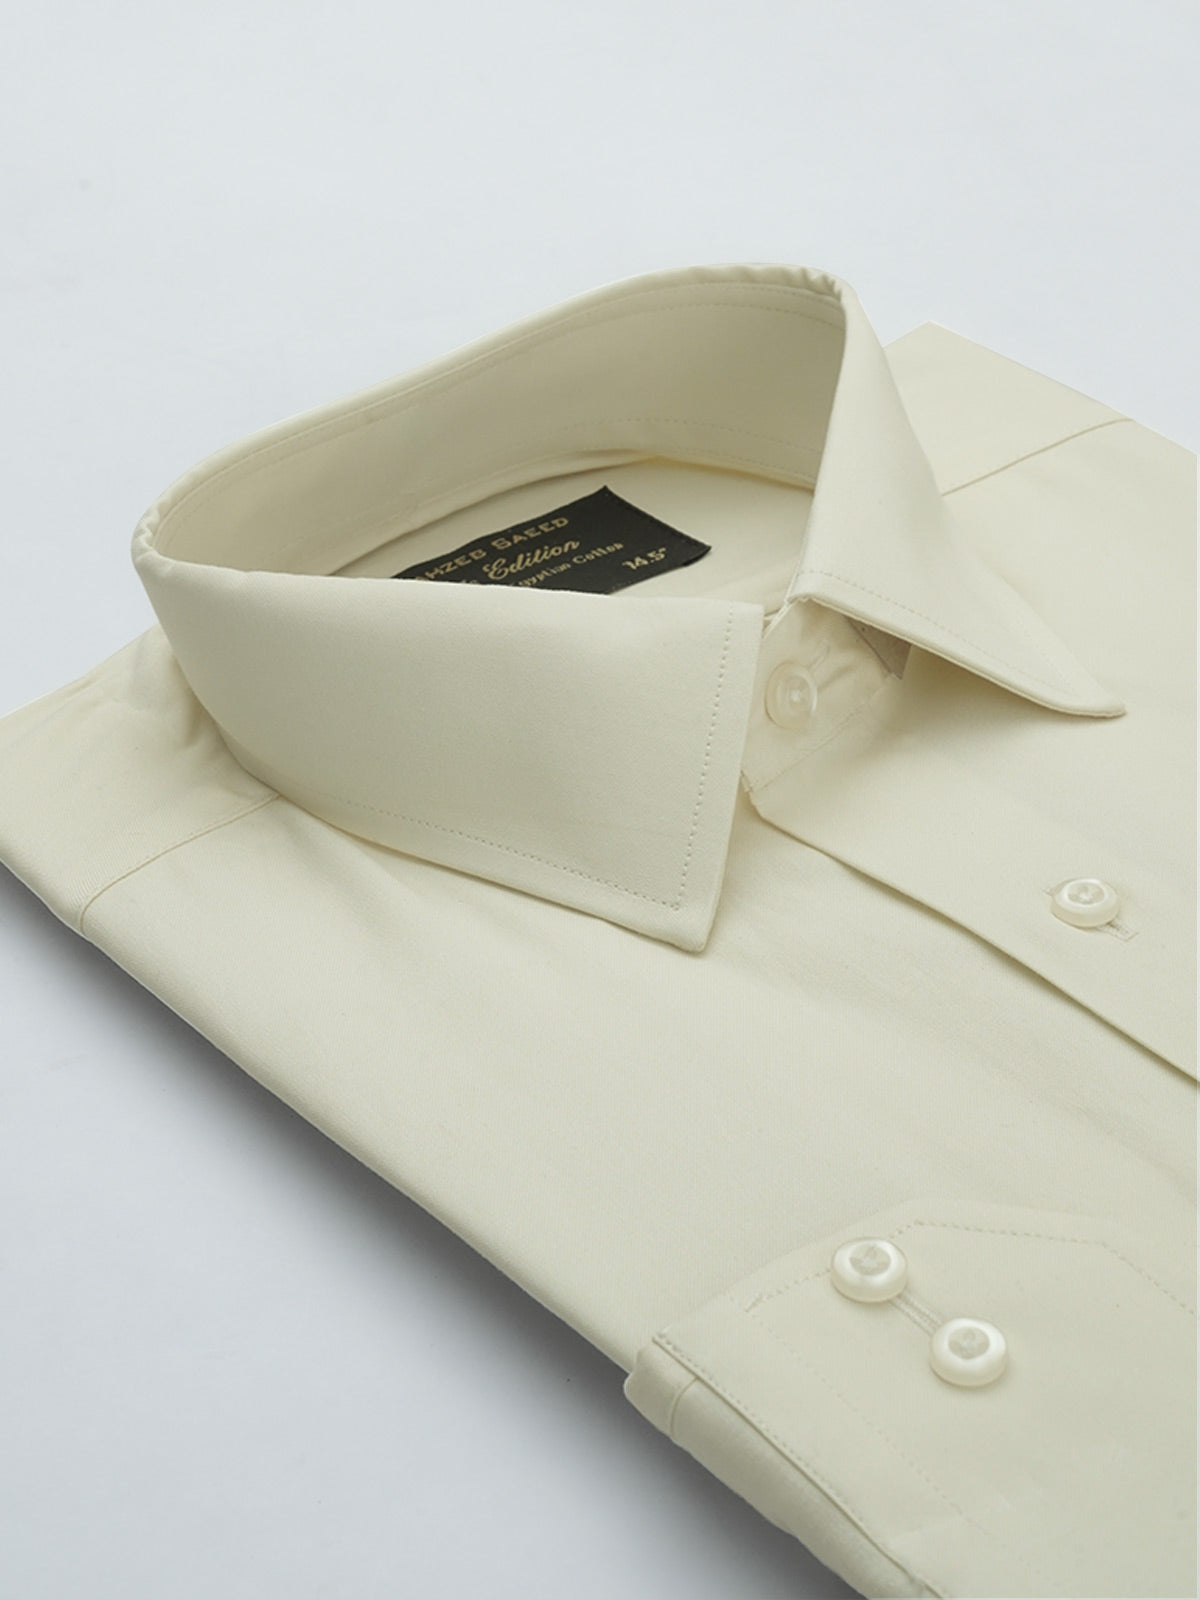 Cream plain, Elite Edition, French Collar Men’s Formal Shirt (FS-670)